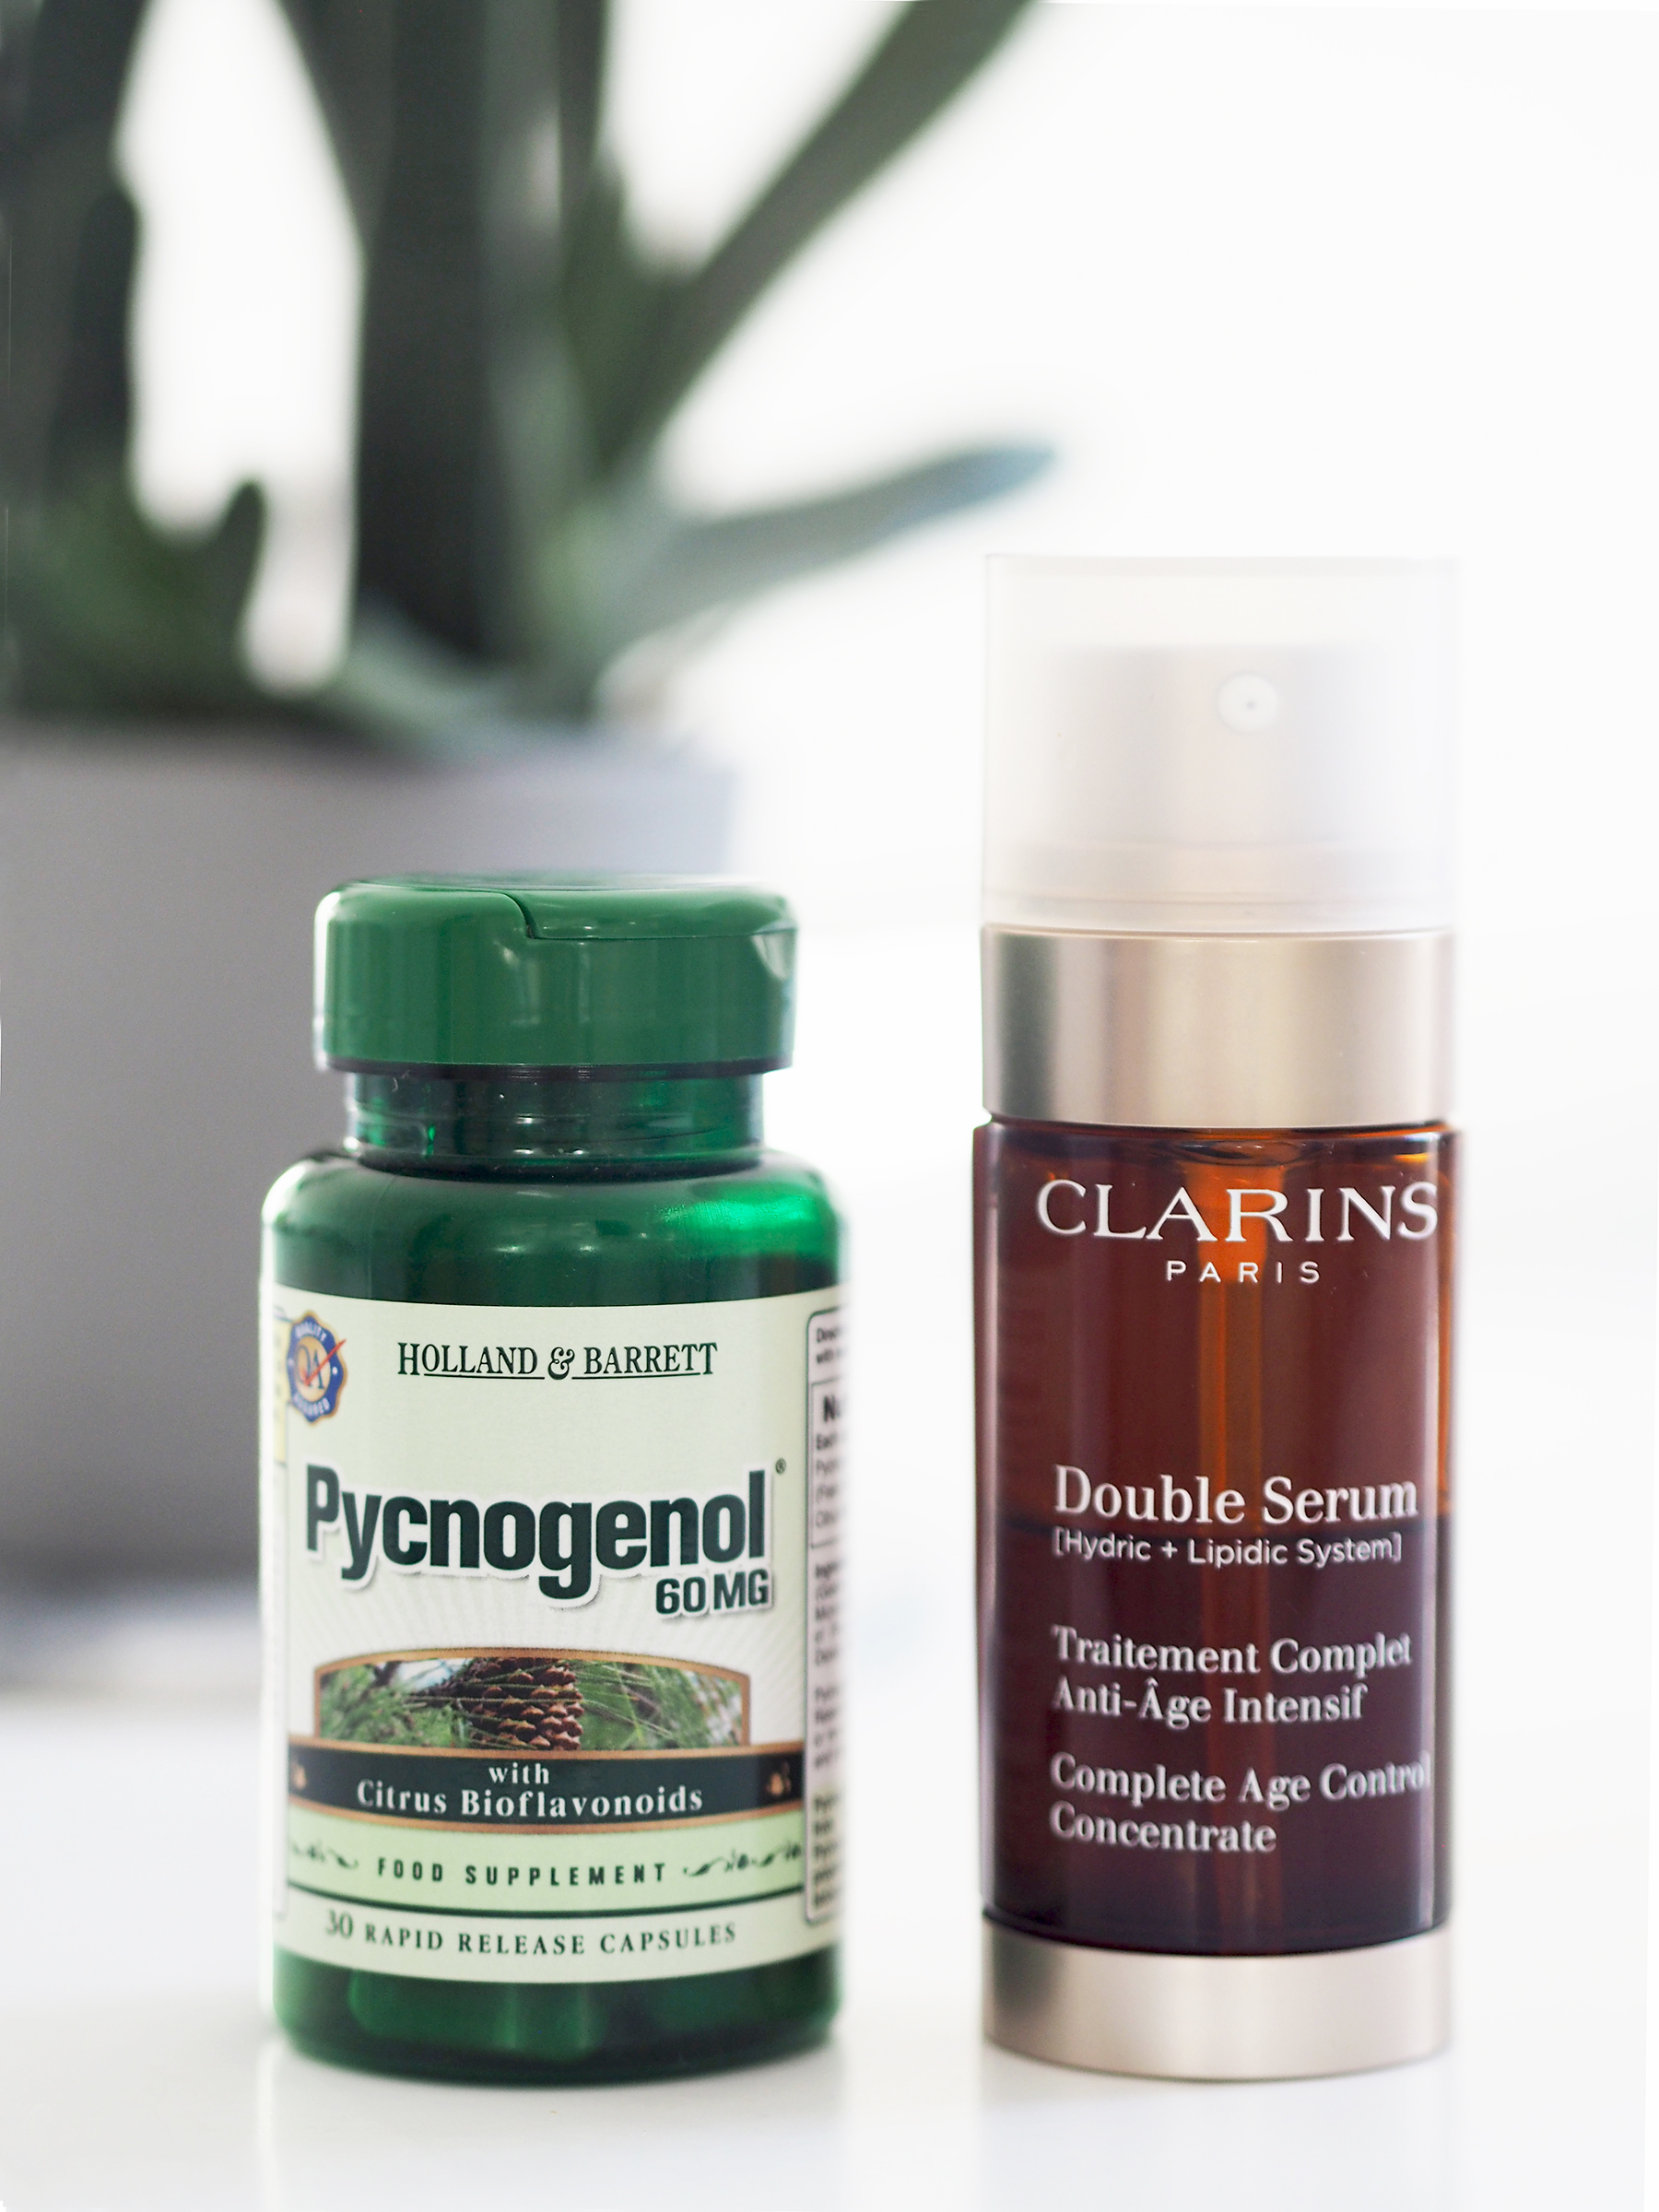 pycnogenol and clarins